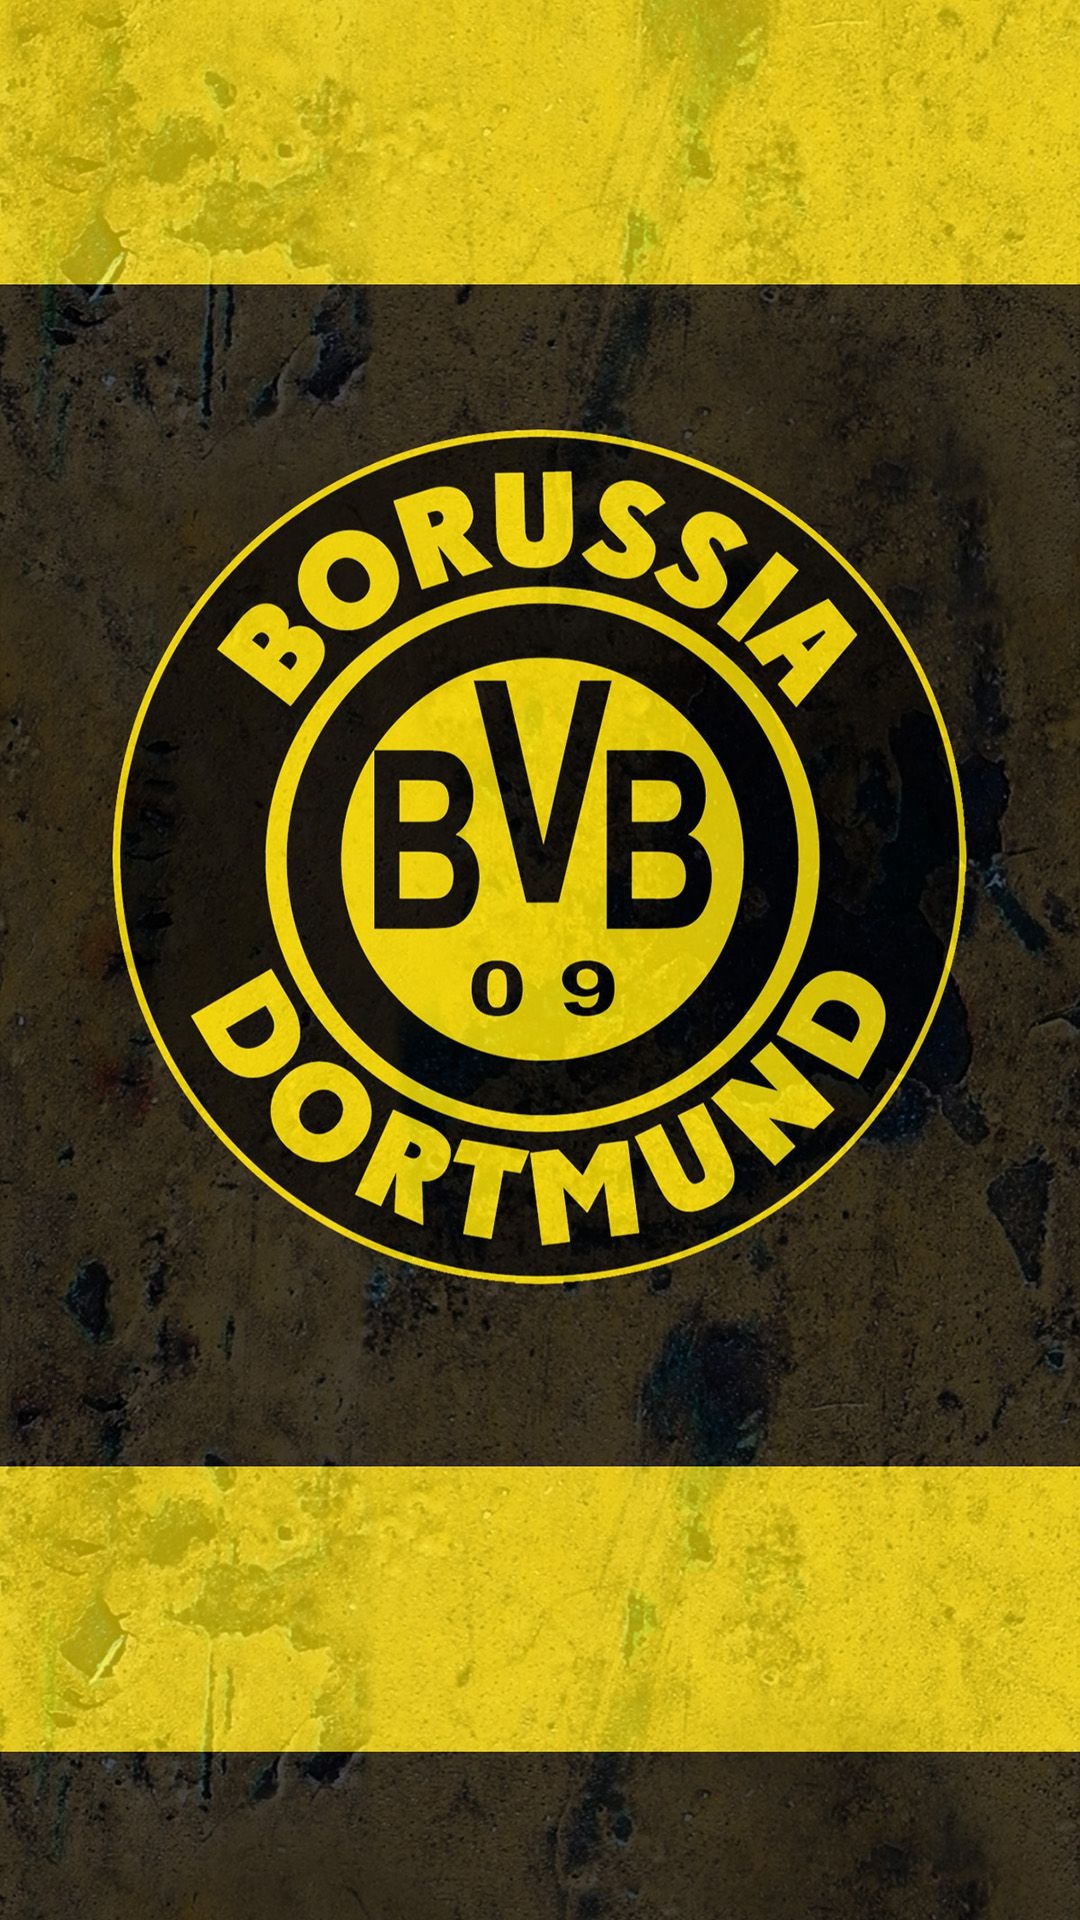 Borussia Dortmund: BVB, Lifted the Bundesliga title on nine occasions. 1080x1920 Full HD Wallpaper.